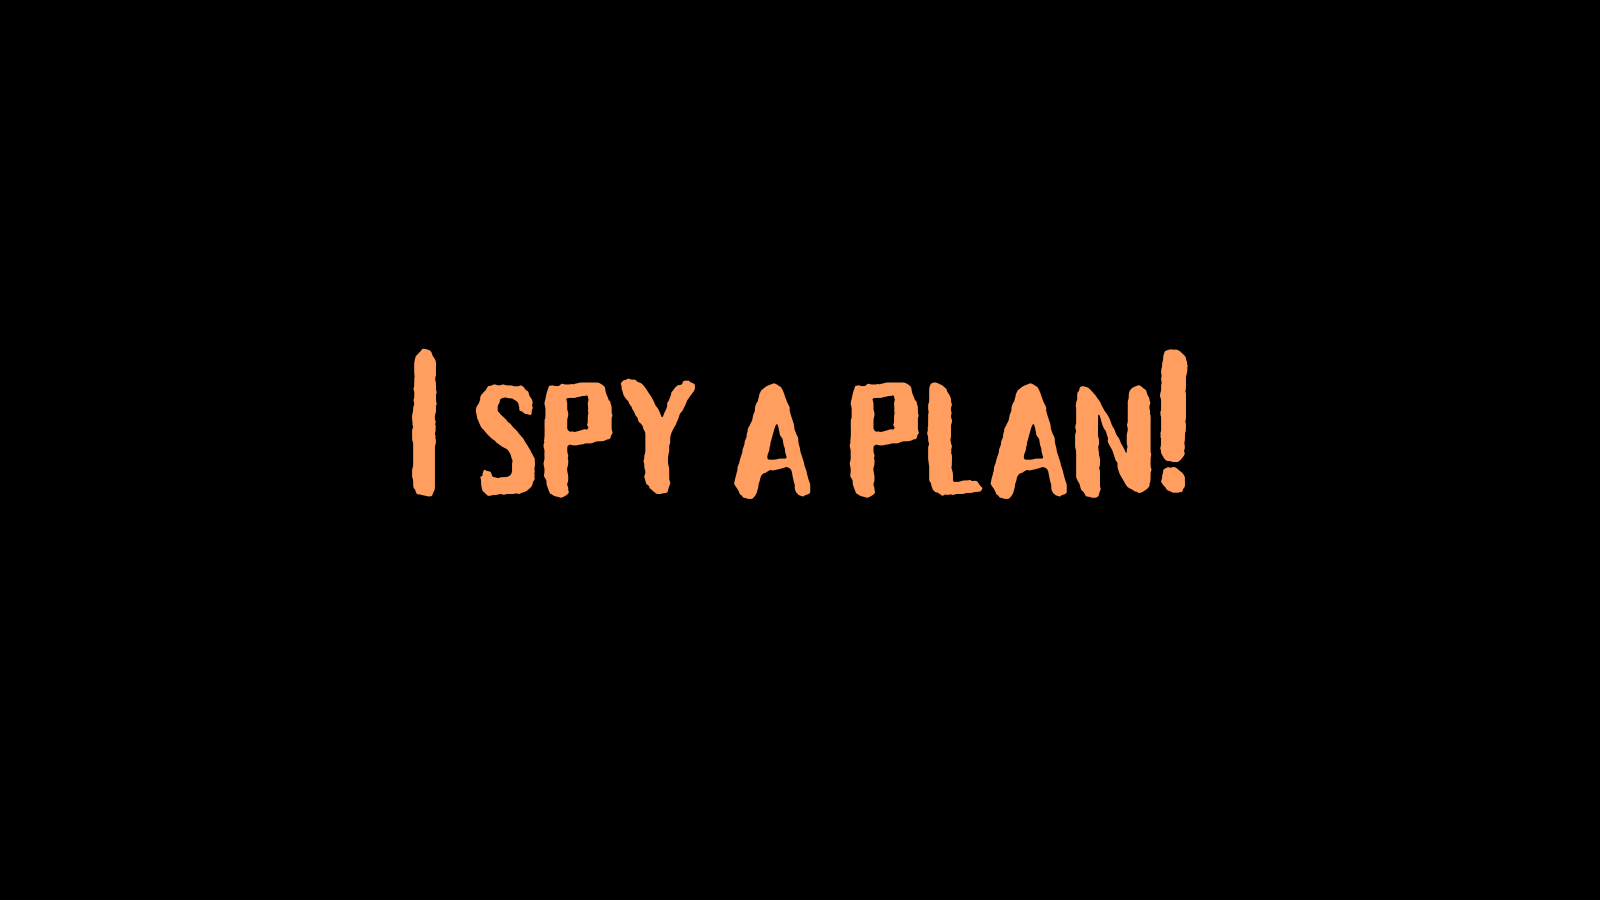 I spy a plan!